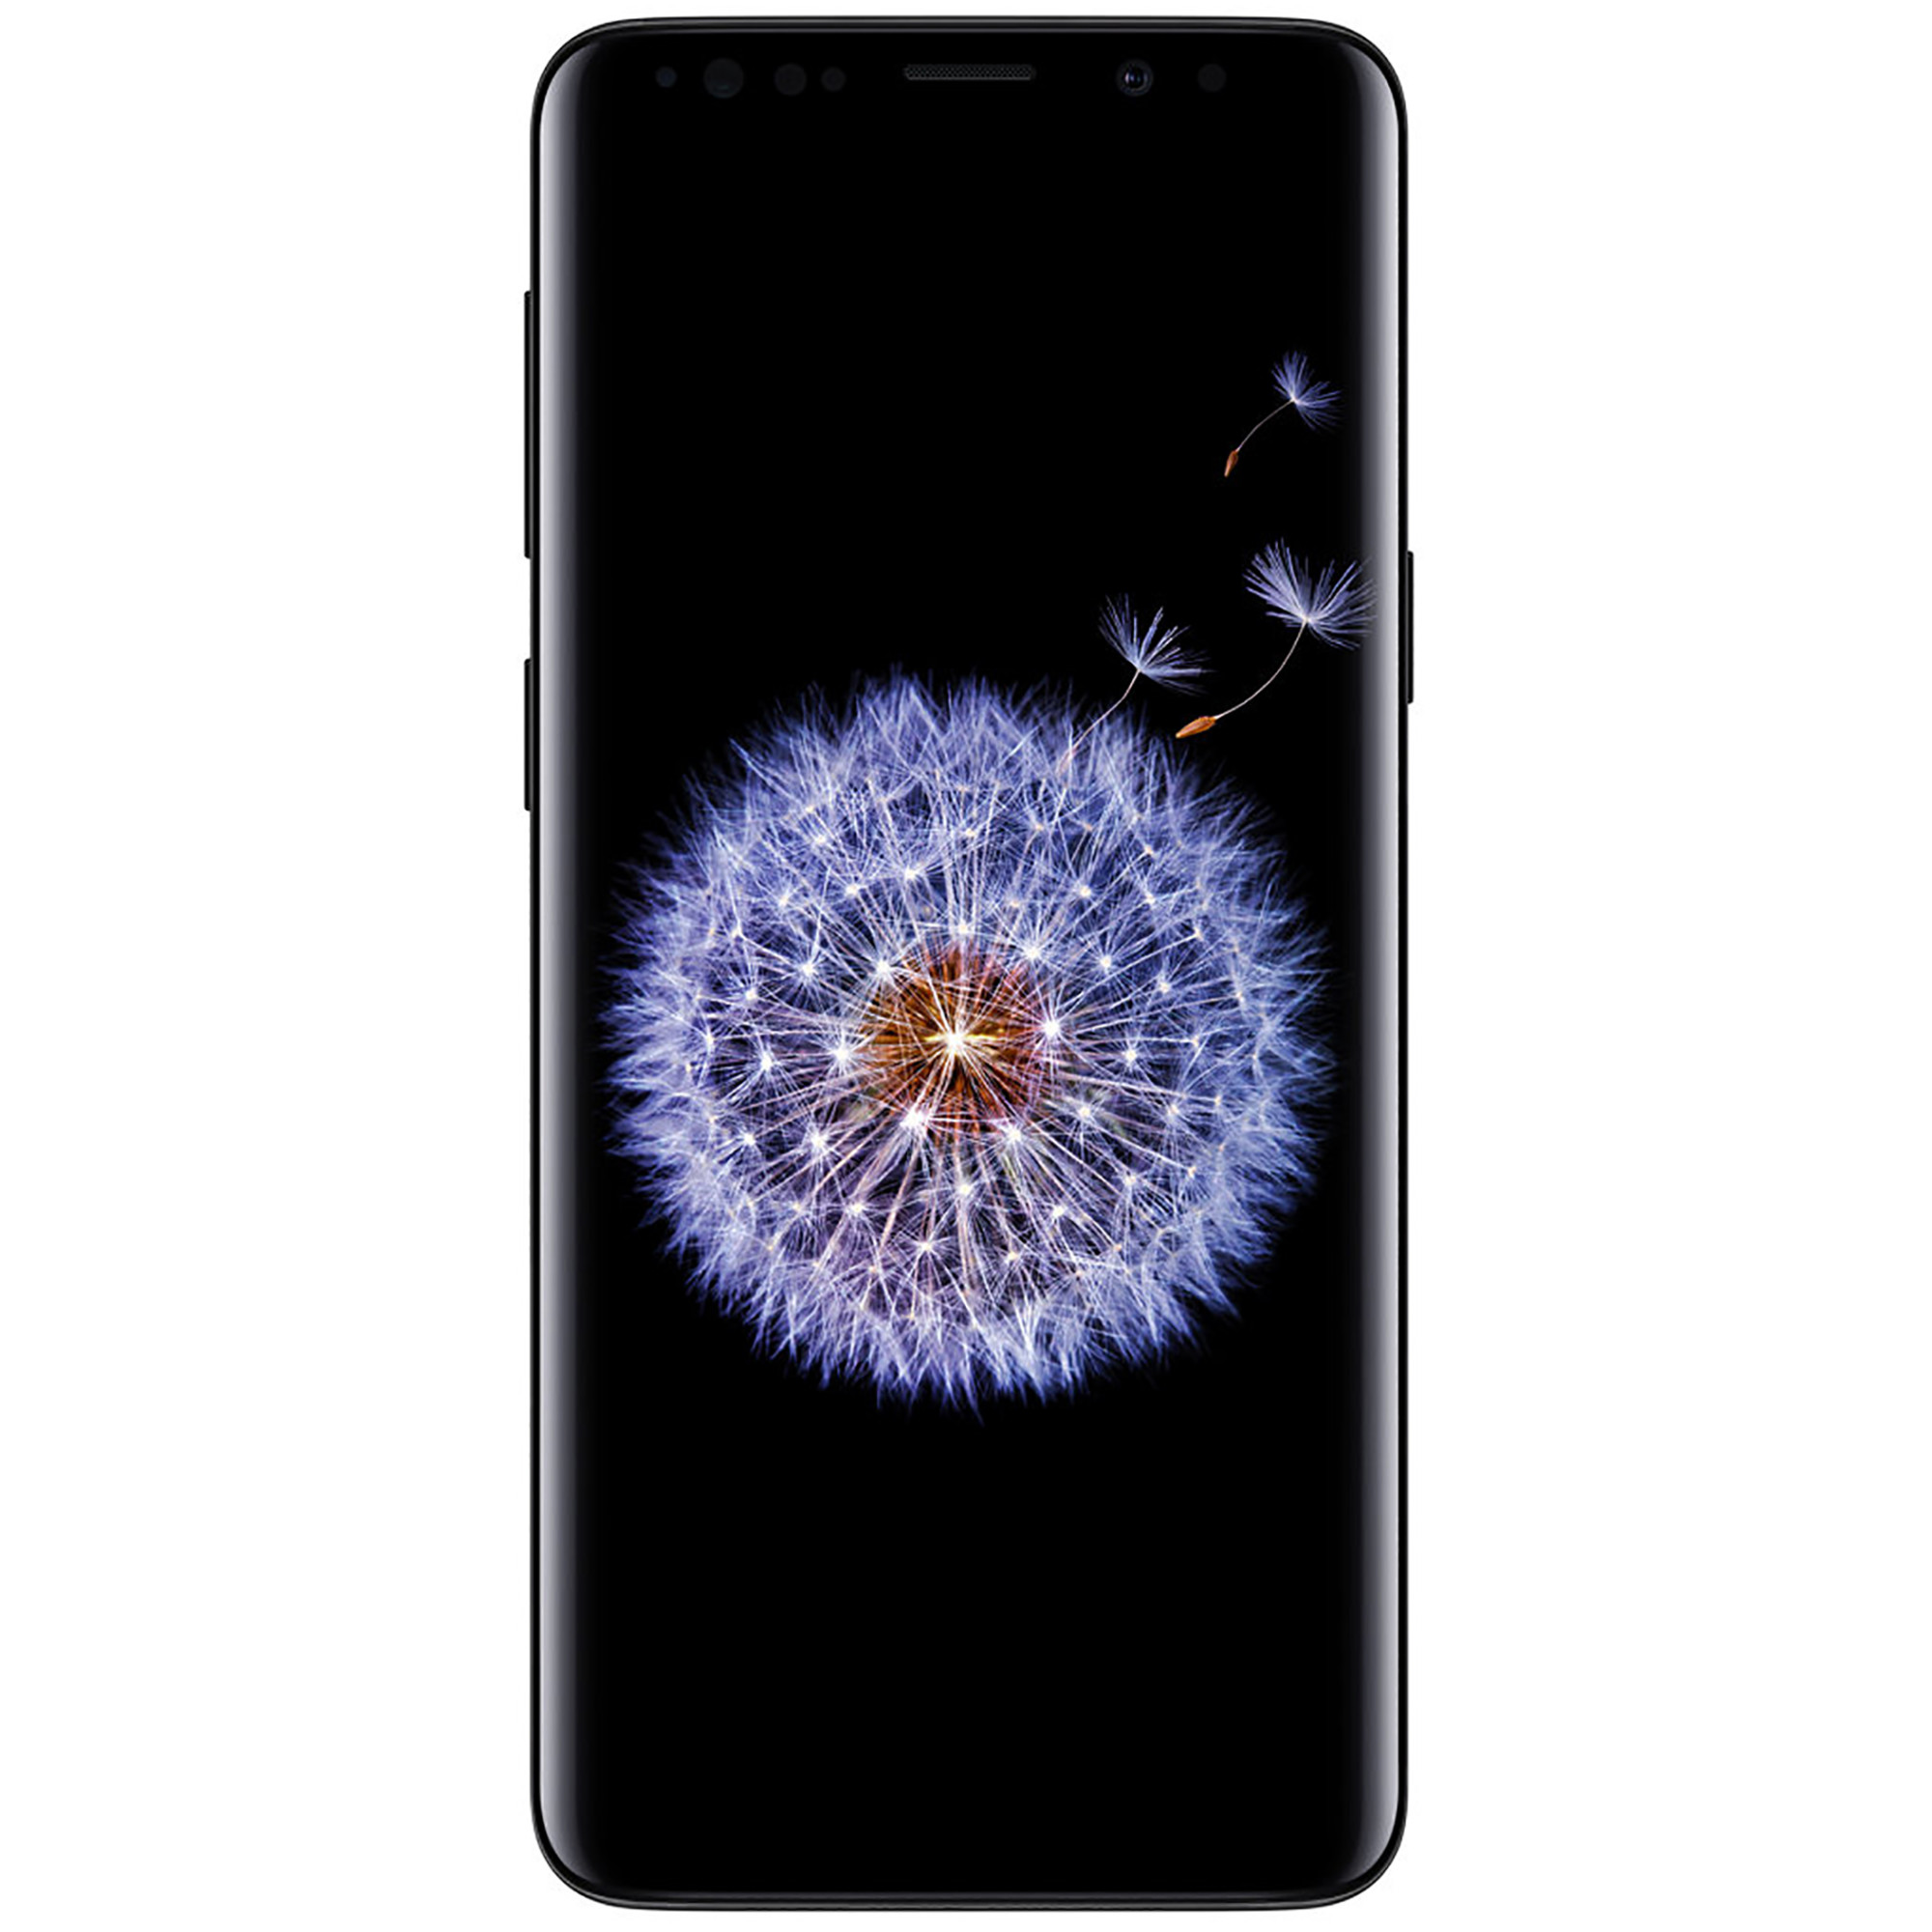 SAMSUNG Unlocked Galaxy S9, 64GB Black - Smartphone - image 1 of 4